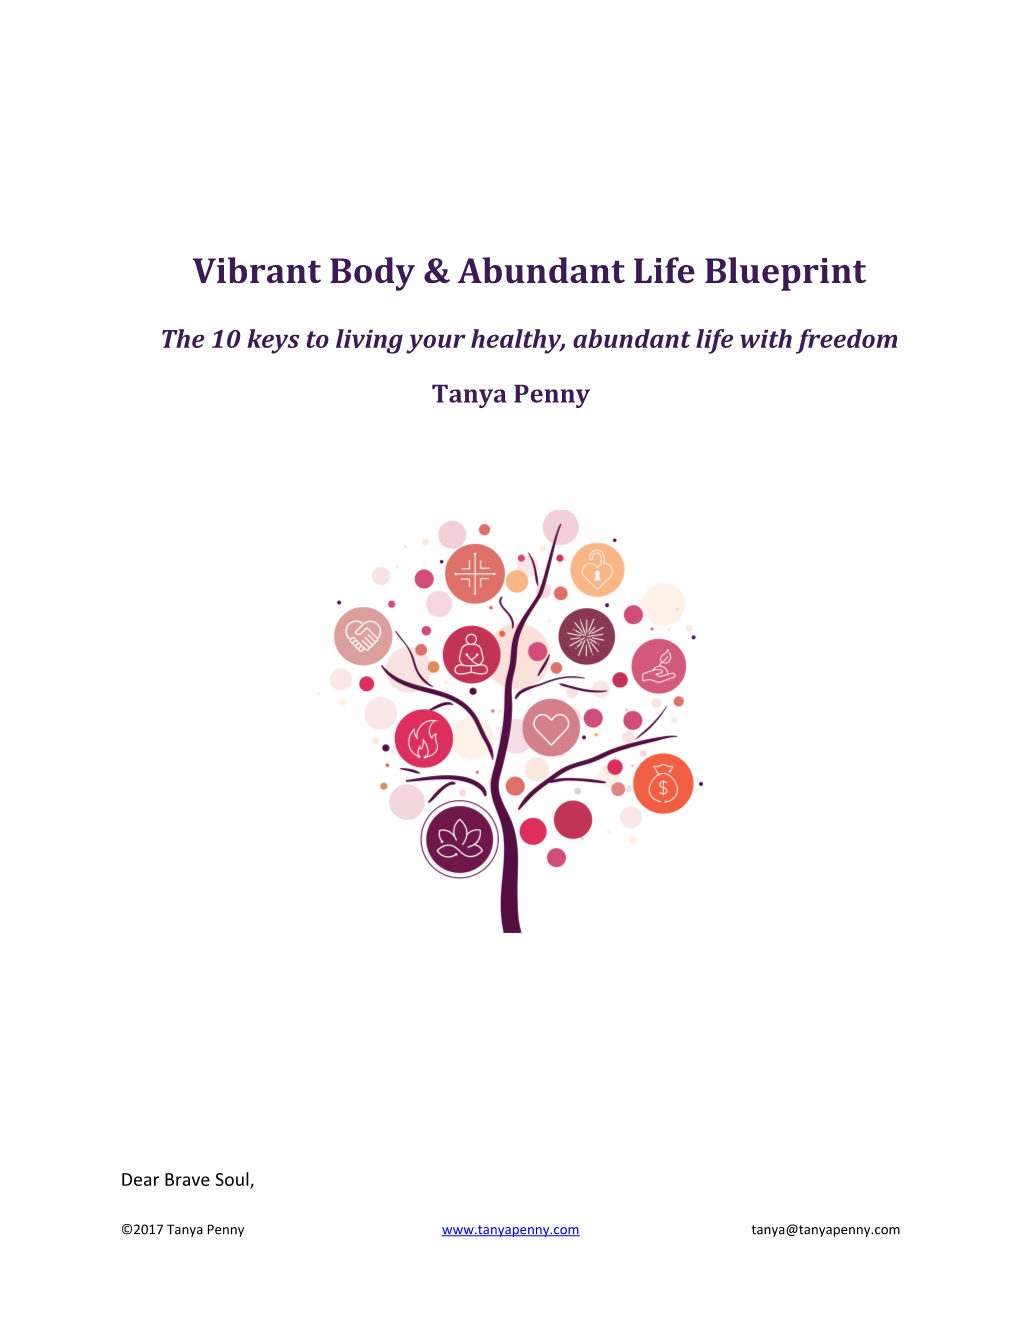 Vibrant Body & Abundant Life Blueprint the 10 Keys to Living Your Healthy, Abundant Life